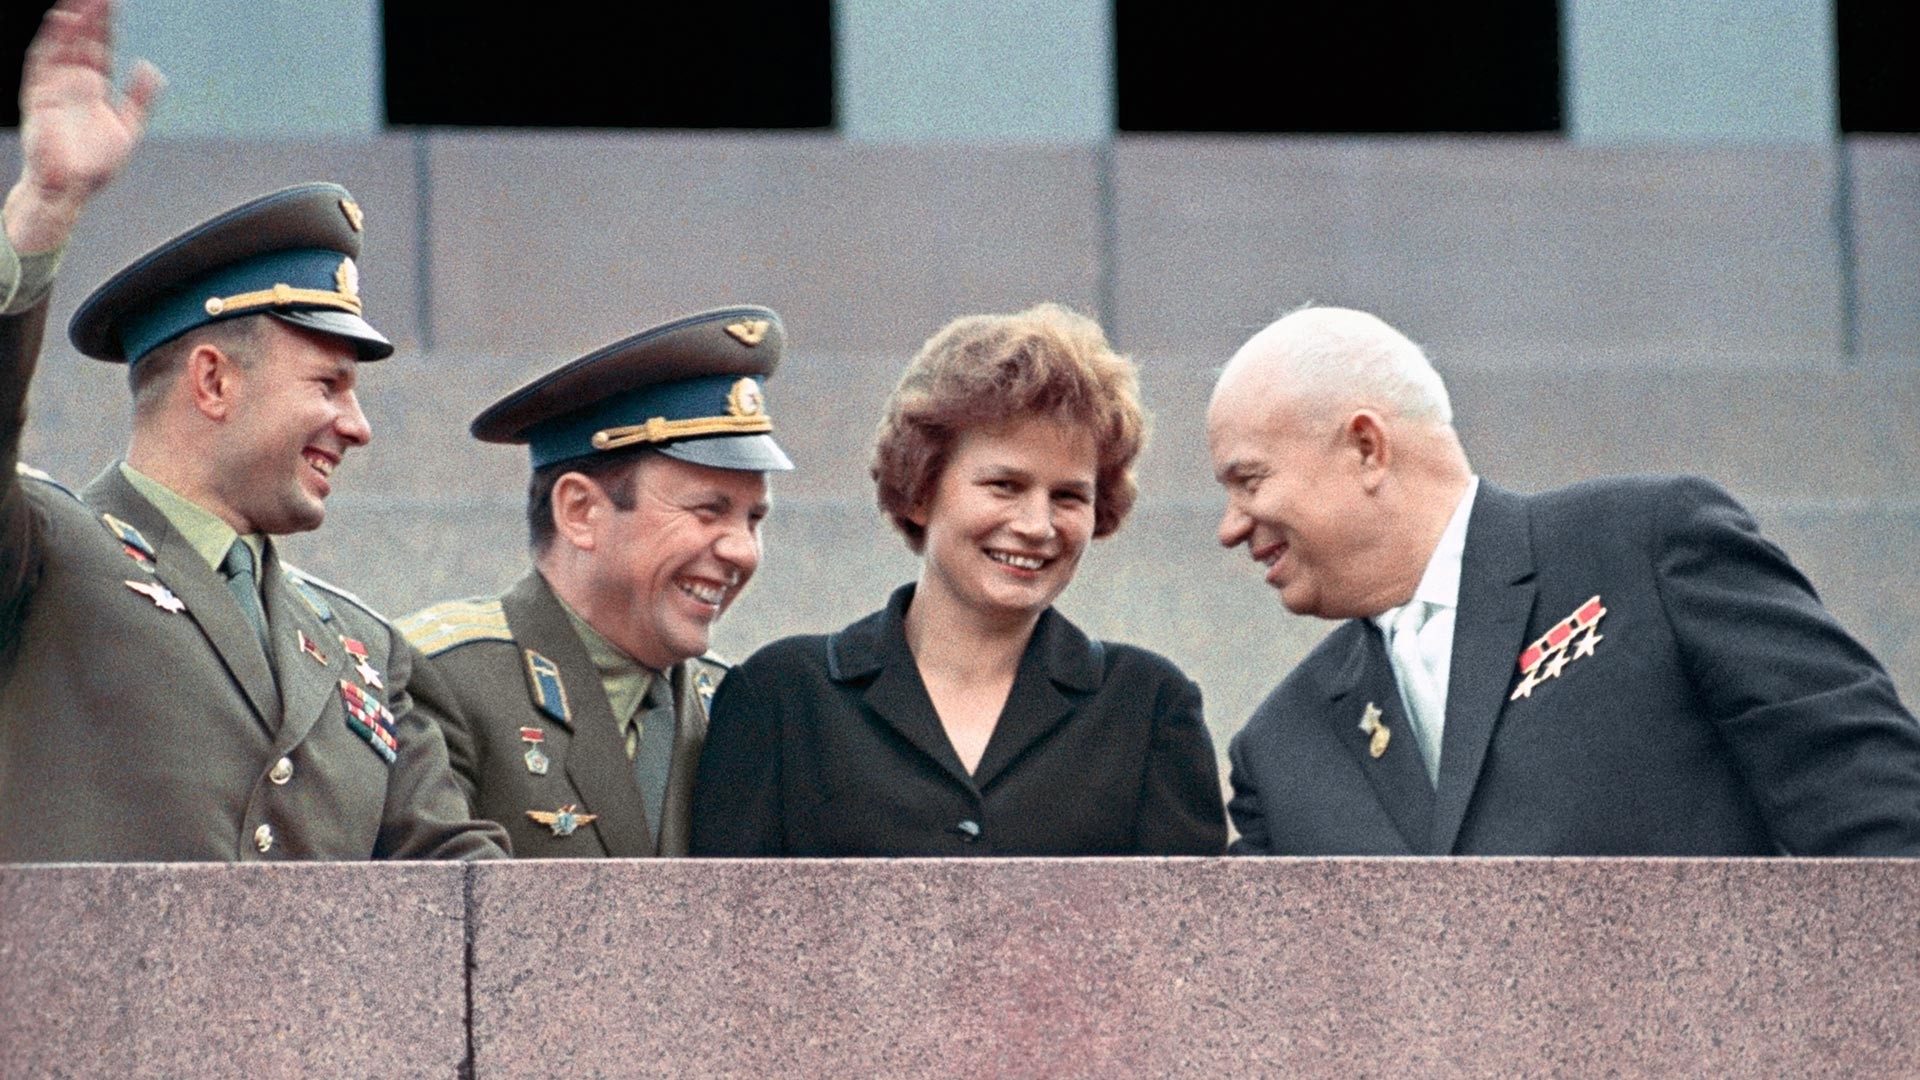 Први секретар ЦК КПСС Никита Хрушчов и космонаути Валентина Терешкова, Павел Попович и Jуриj Гагарин (с десна на лево) 